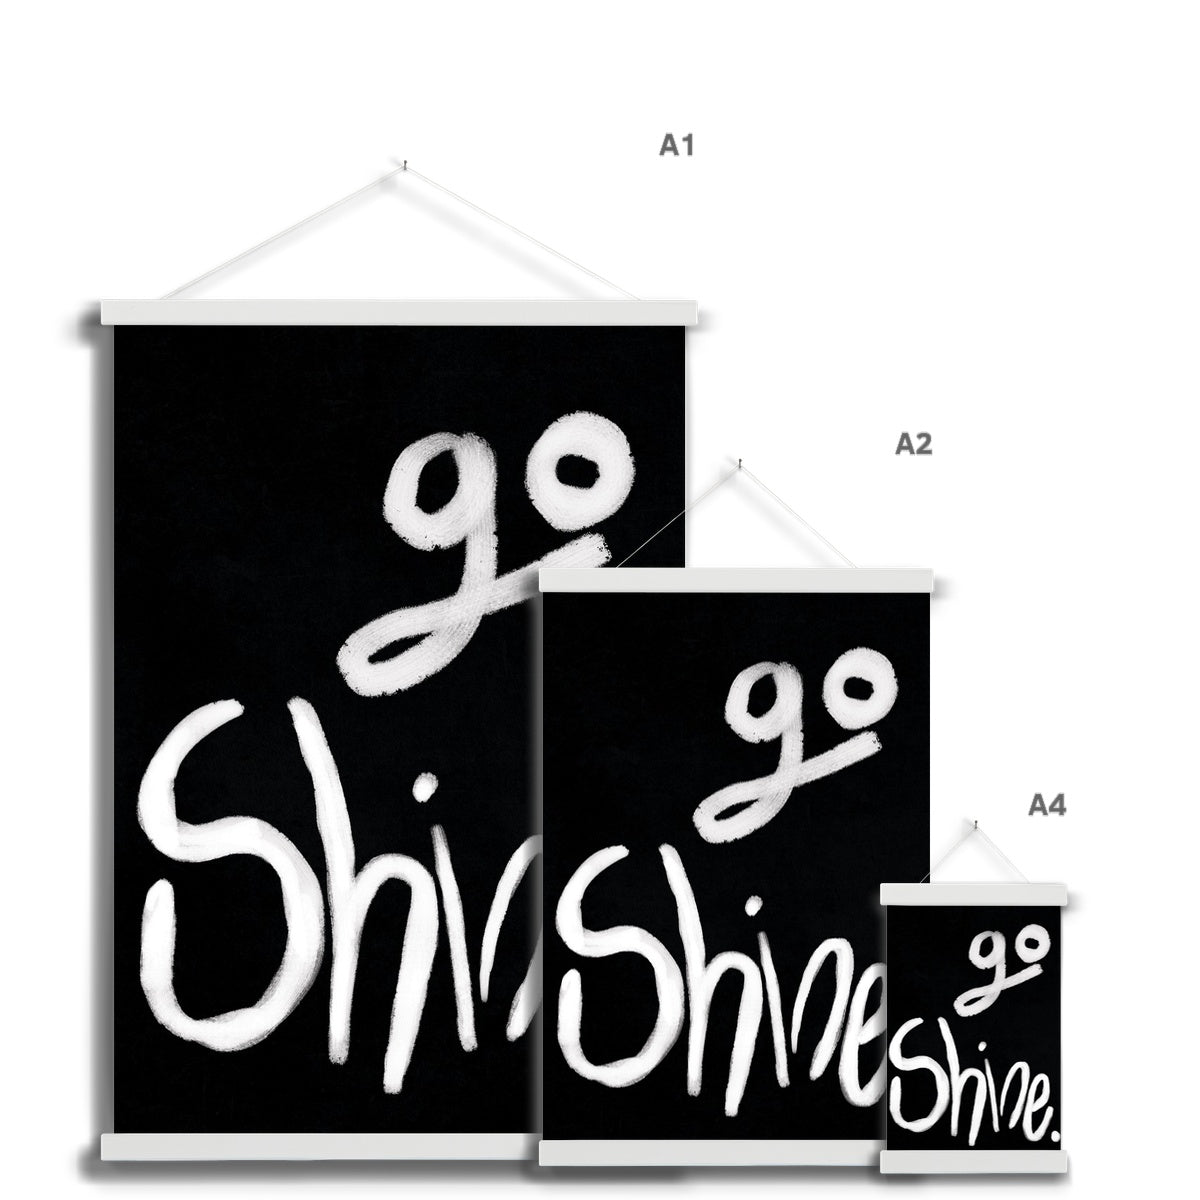 Go Shine - Black, White Fine Art Print with Hanger